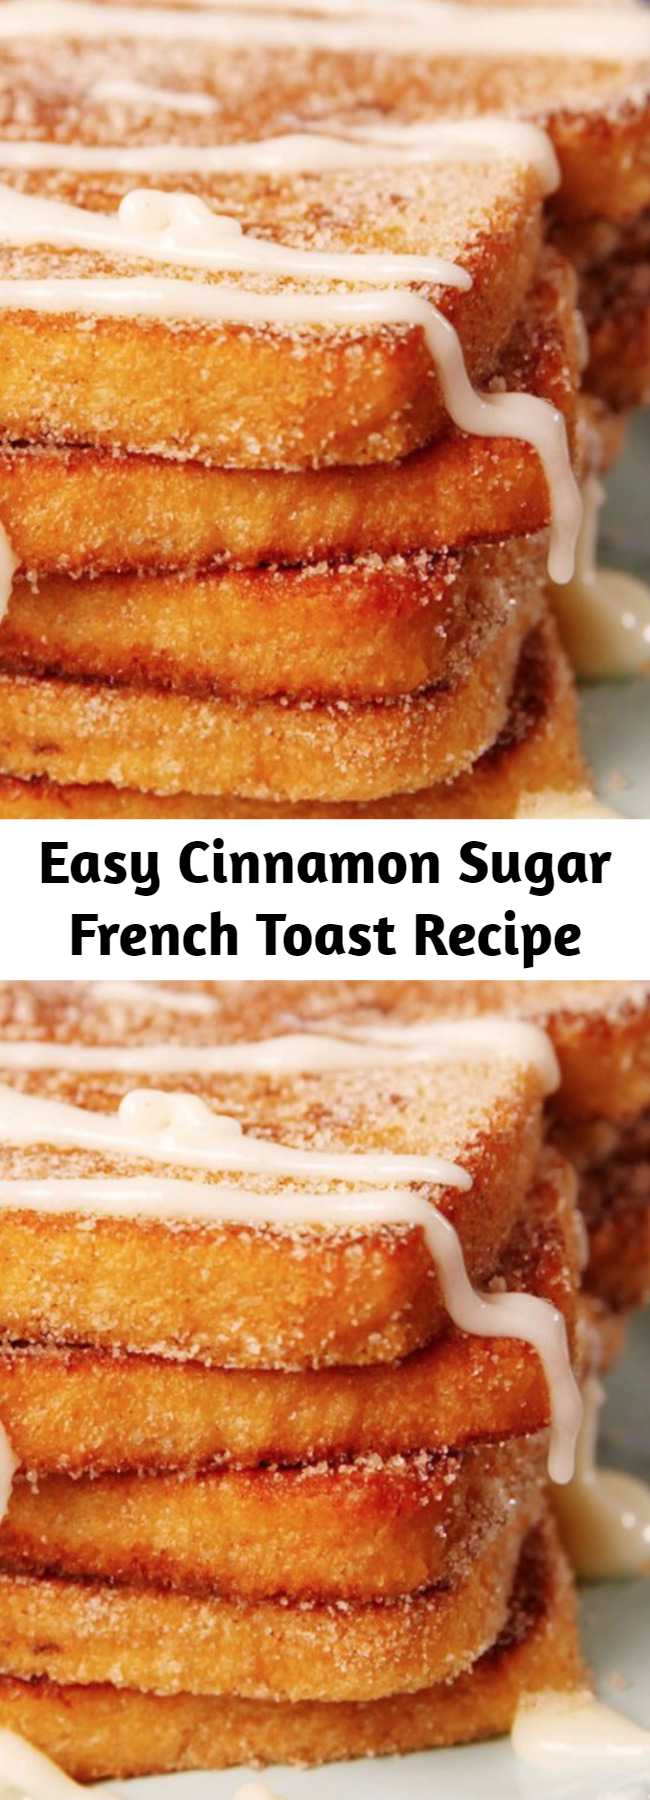 Easy Cinnamon Sugar French Toast Recipe - Churro-fy your breakfast! 😏 #easy #recipe #churro #frenchtoast #breakfast #cinnamon #sugar #brunch